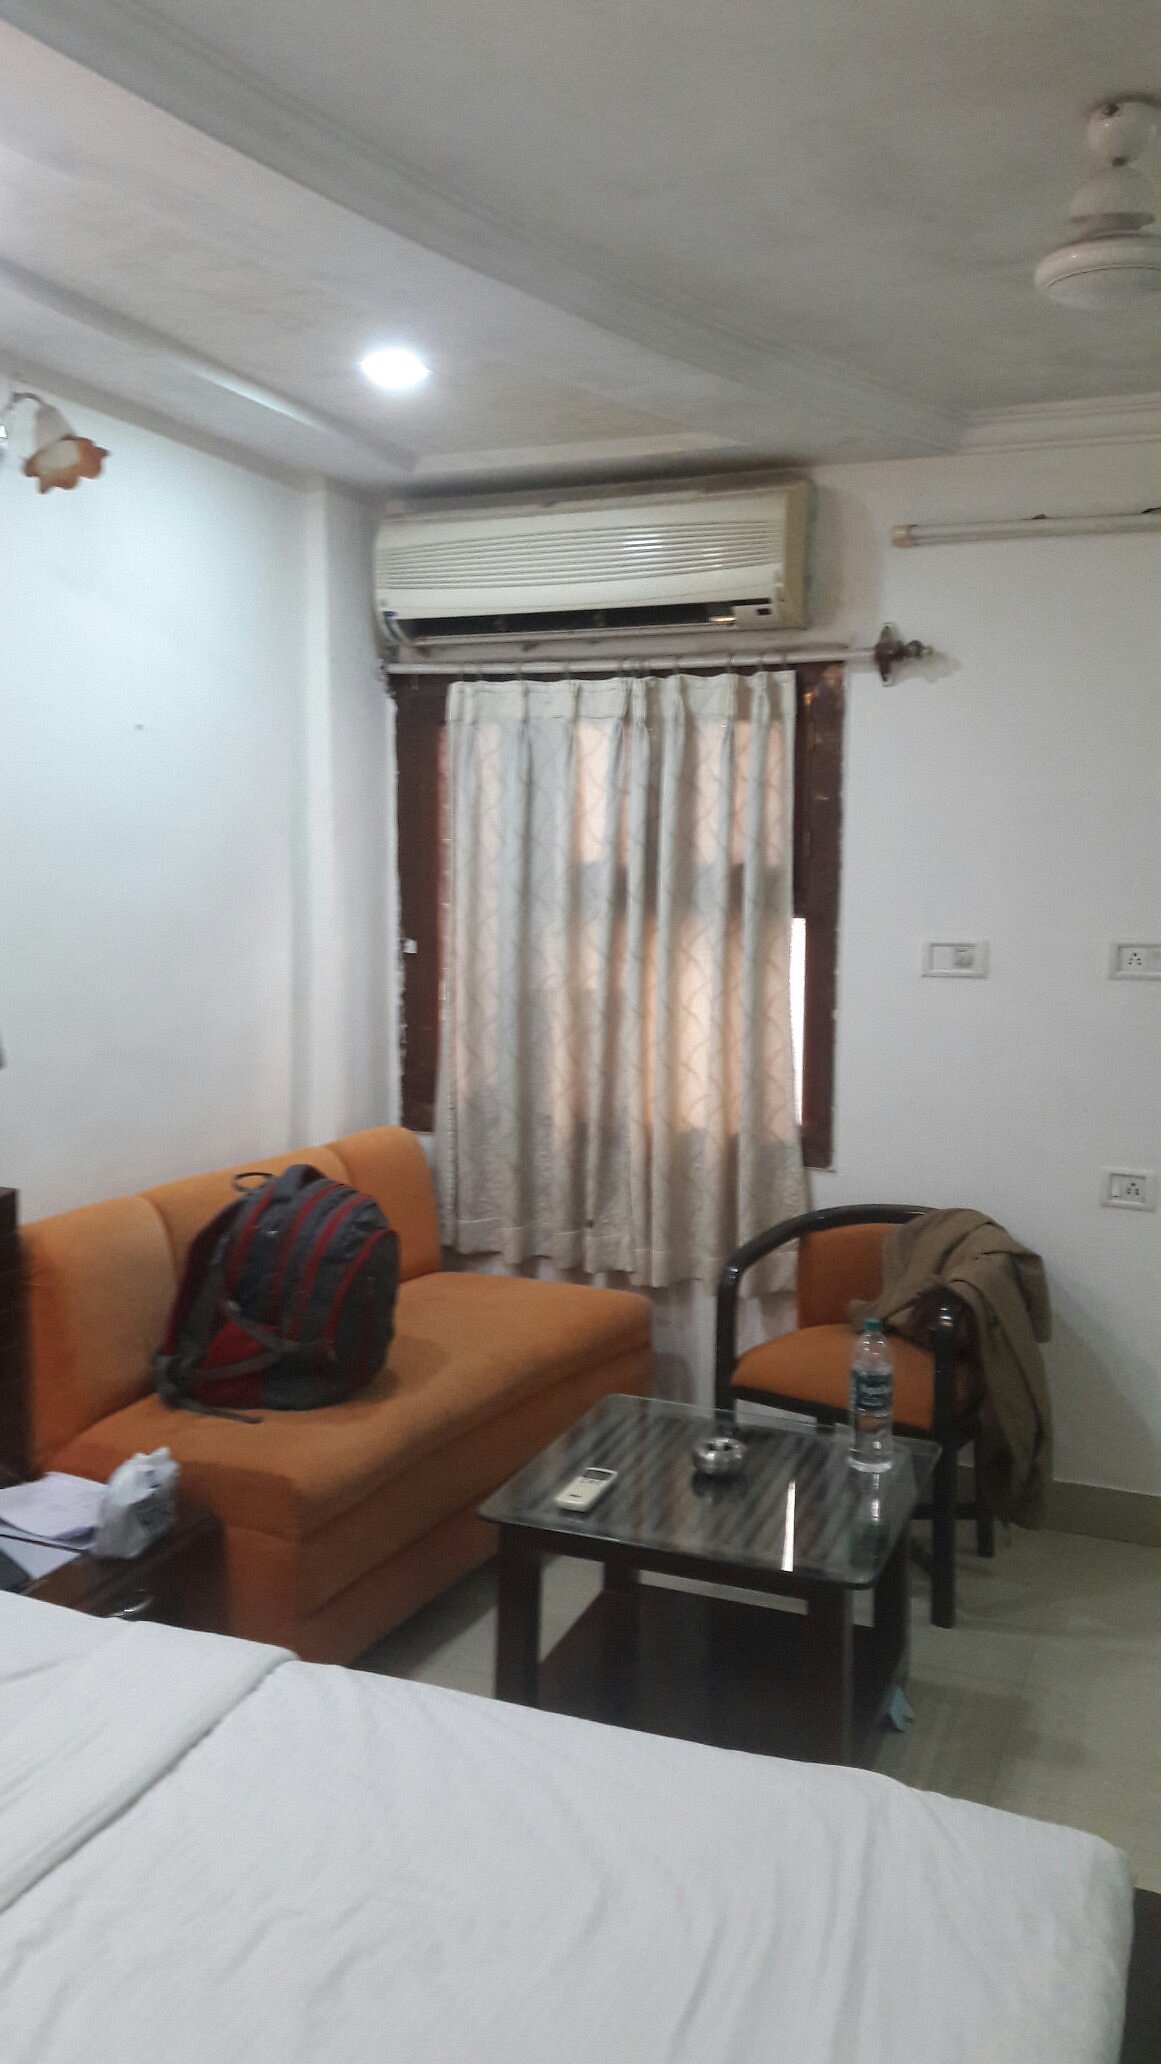 GHORE HOSTEL (NEW) Nariyal kothi dayalband bilaspur - Student dormitory in  Bilaspur, India